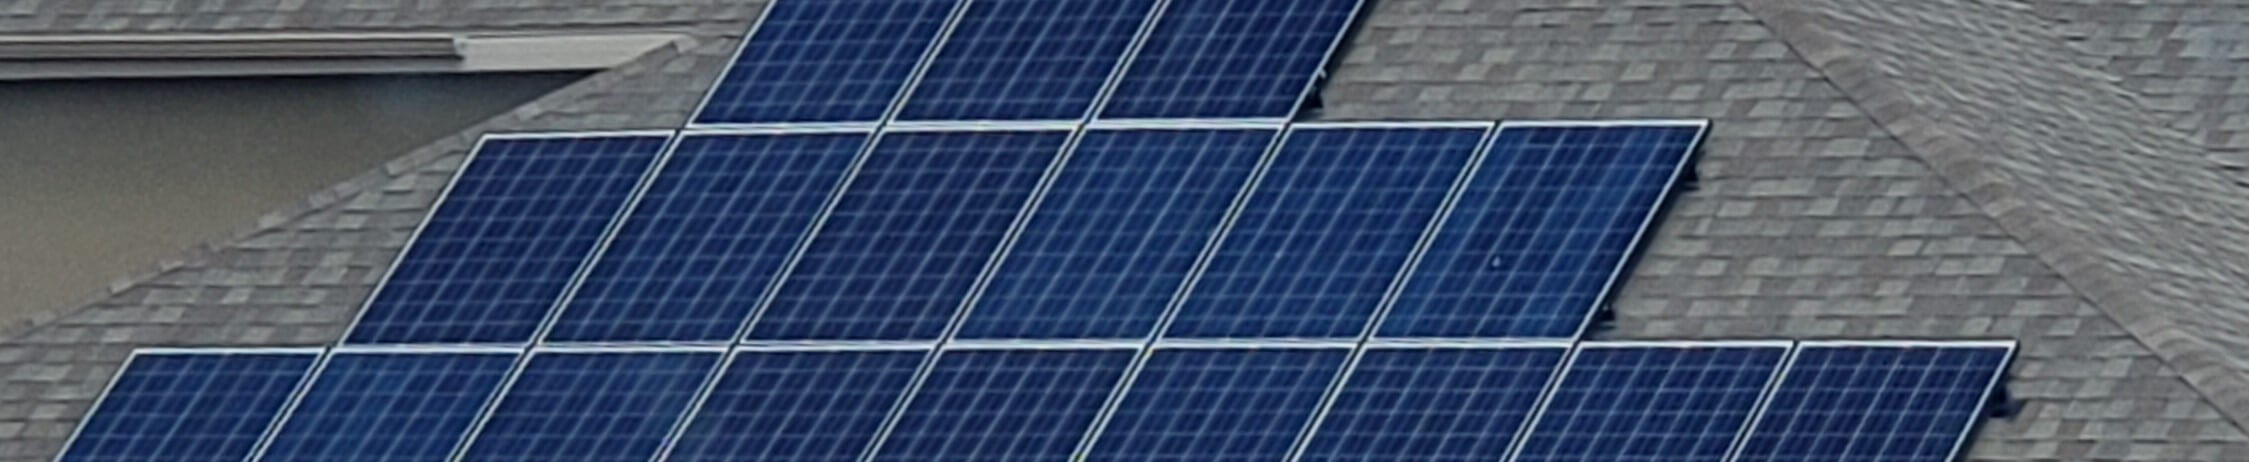 Solar Panels On A Residential Home in Ut